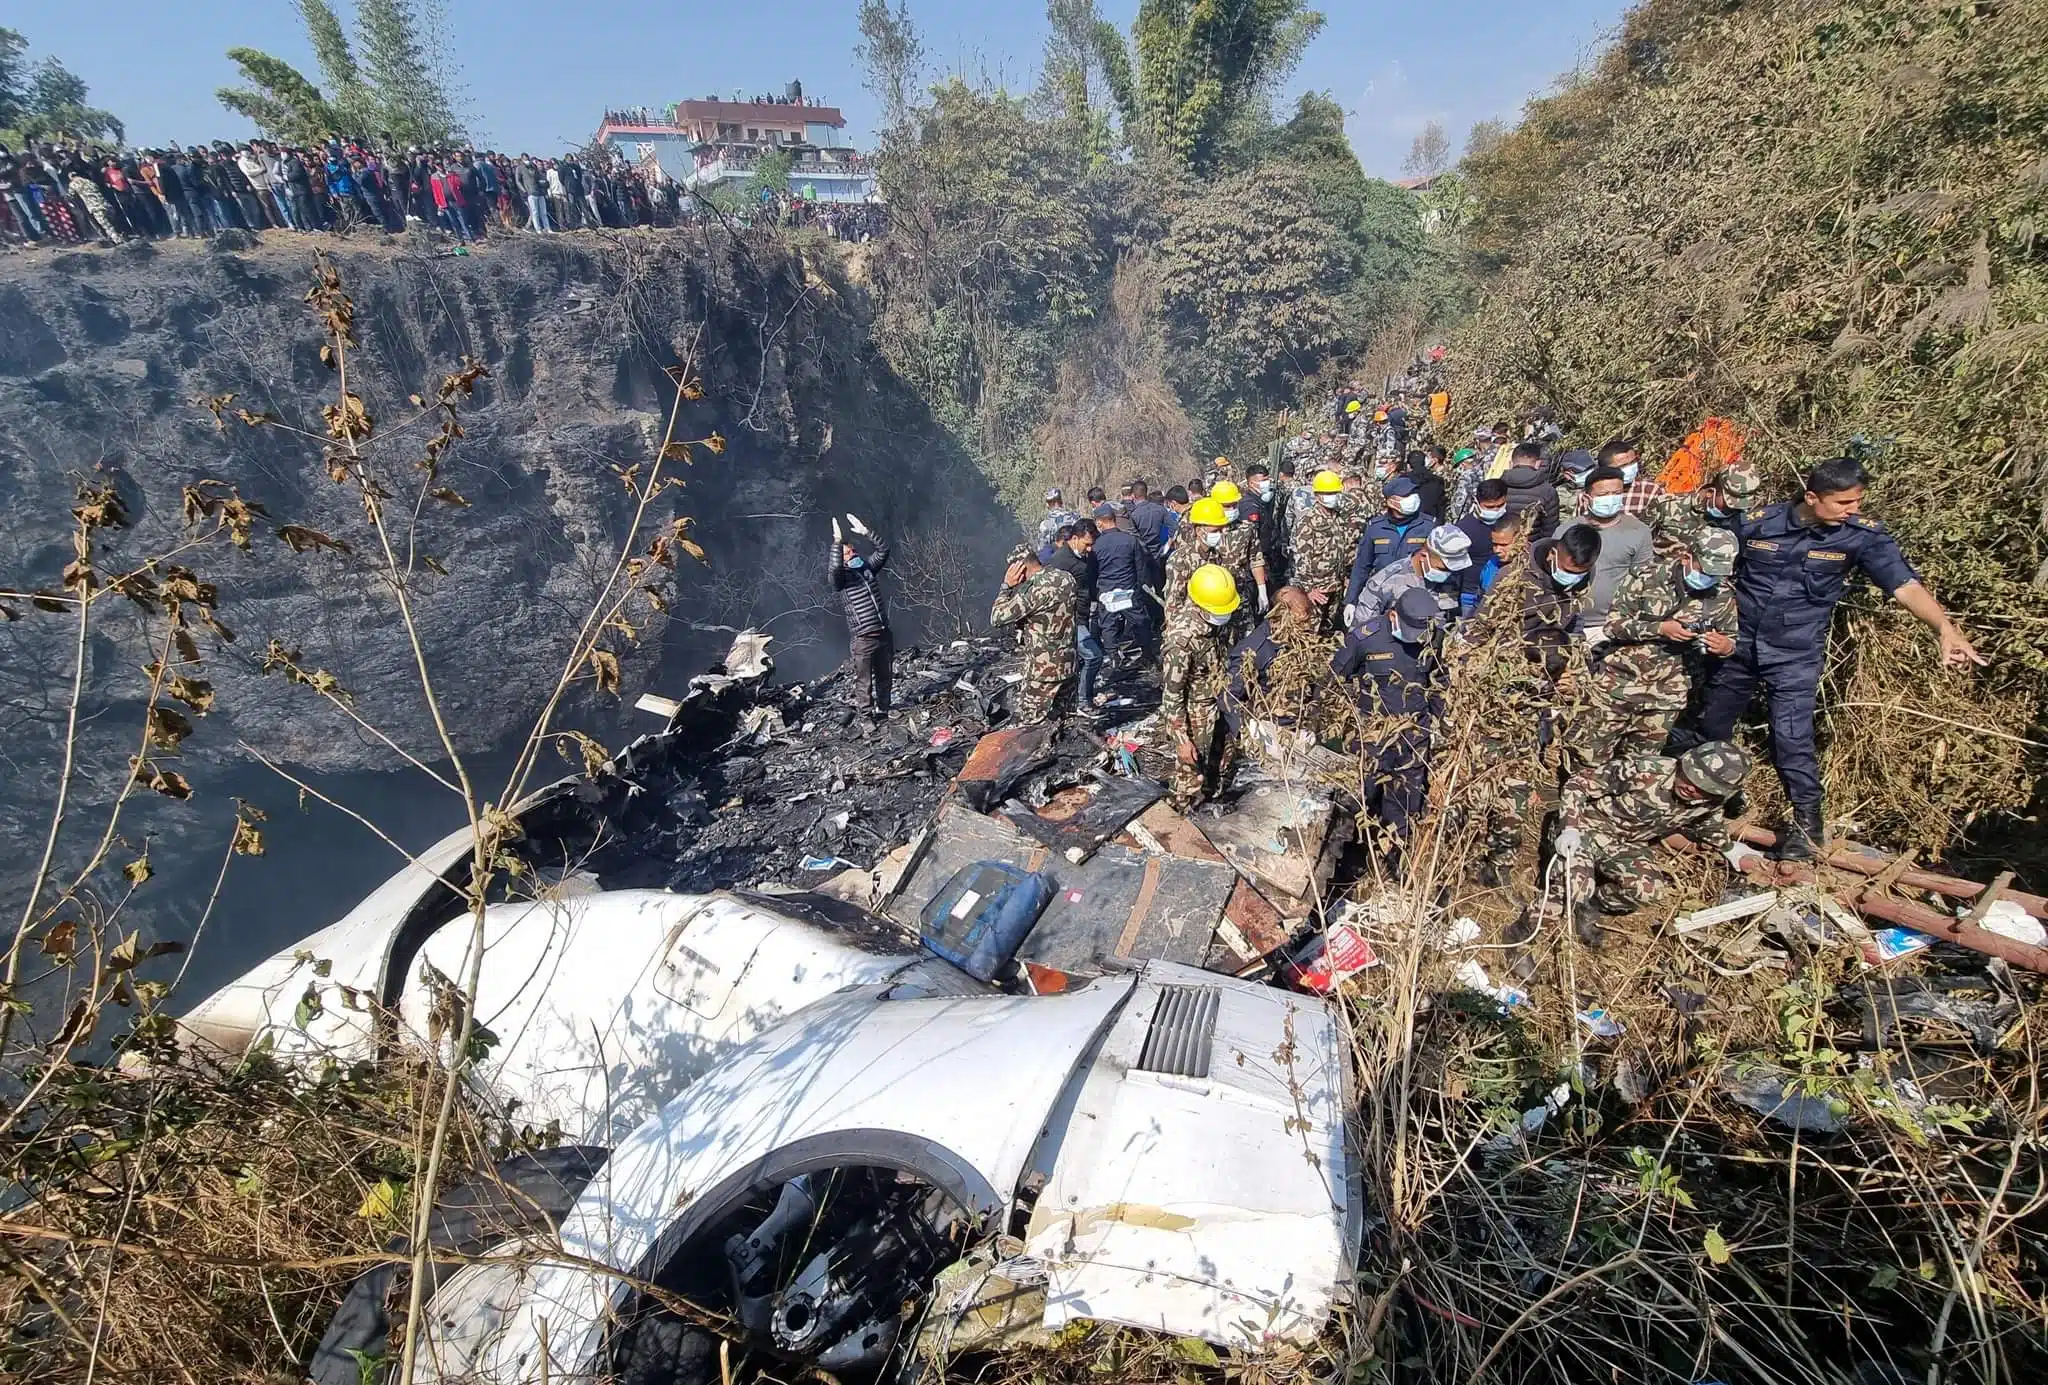 Accidente aéreo en Nepal